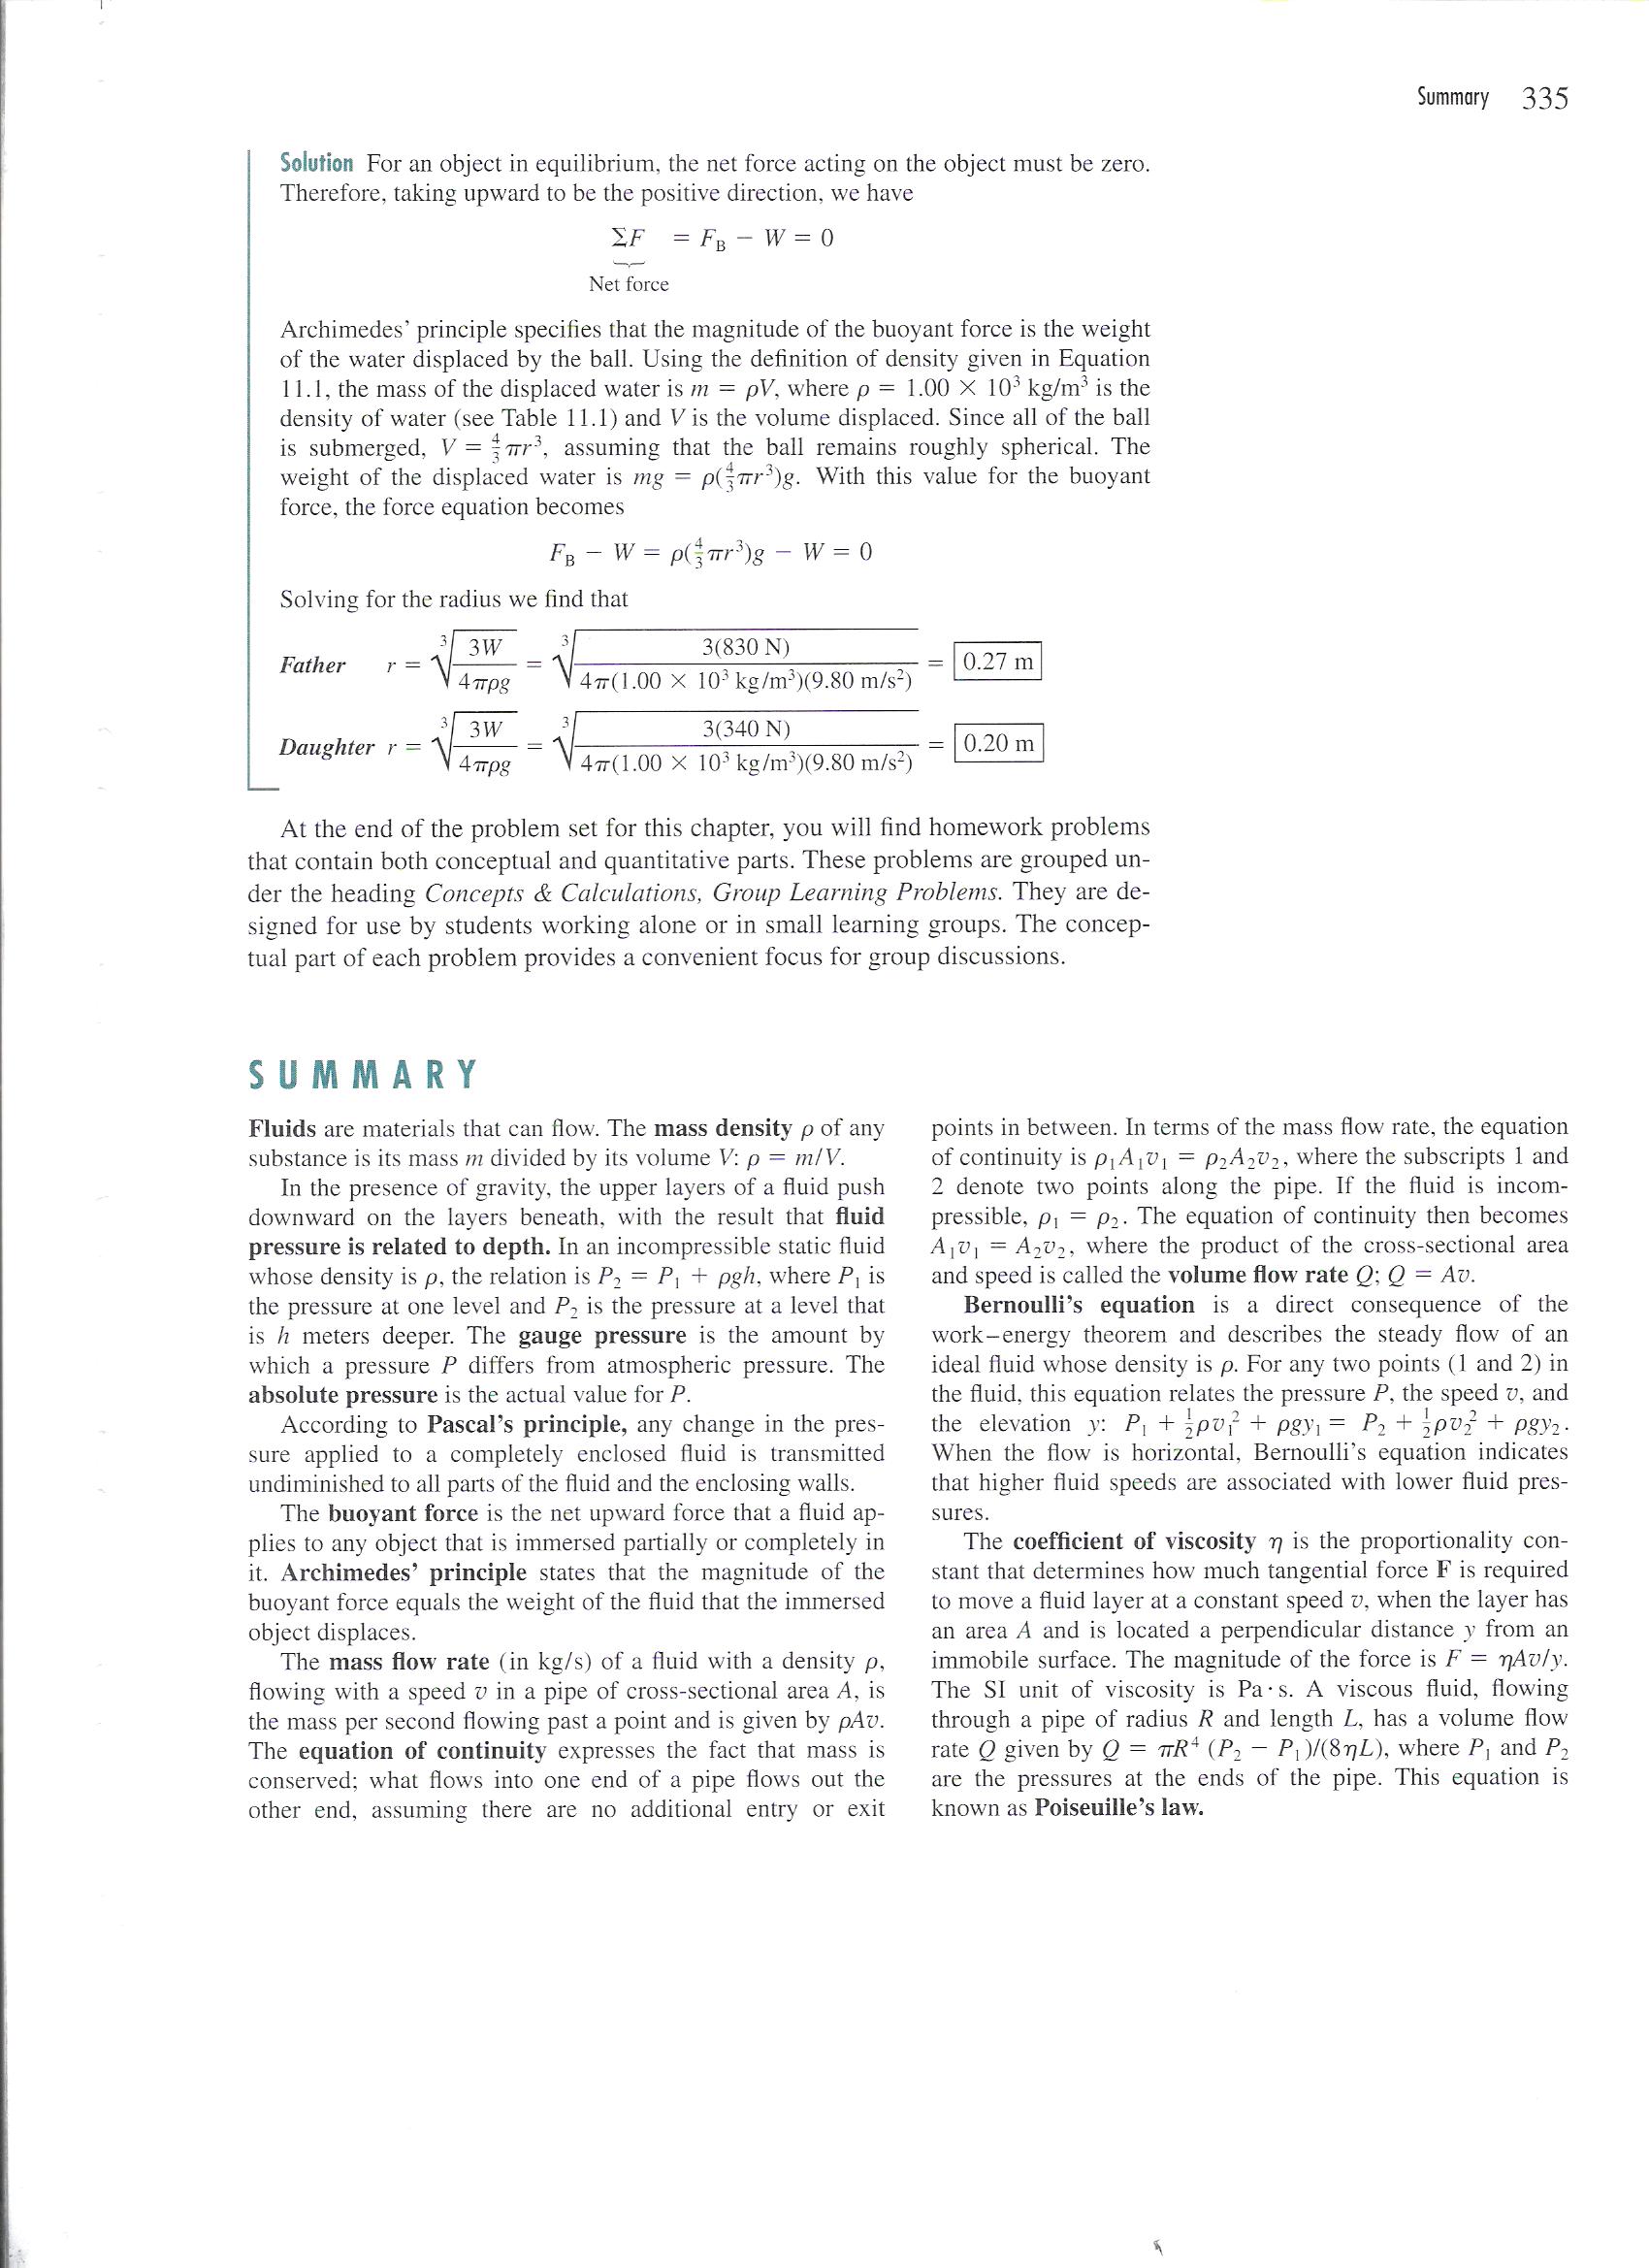 cutnell and johnson physics 10th edition pdf reddit